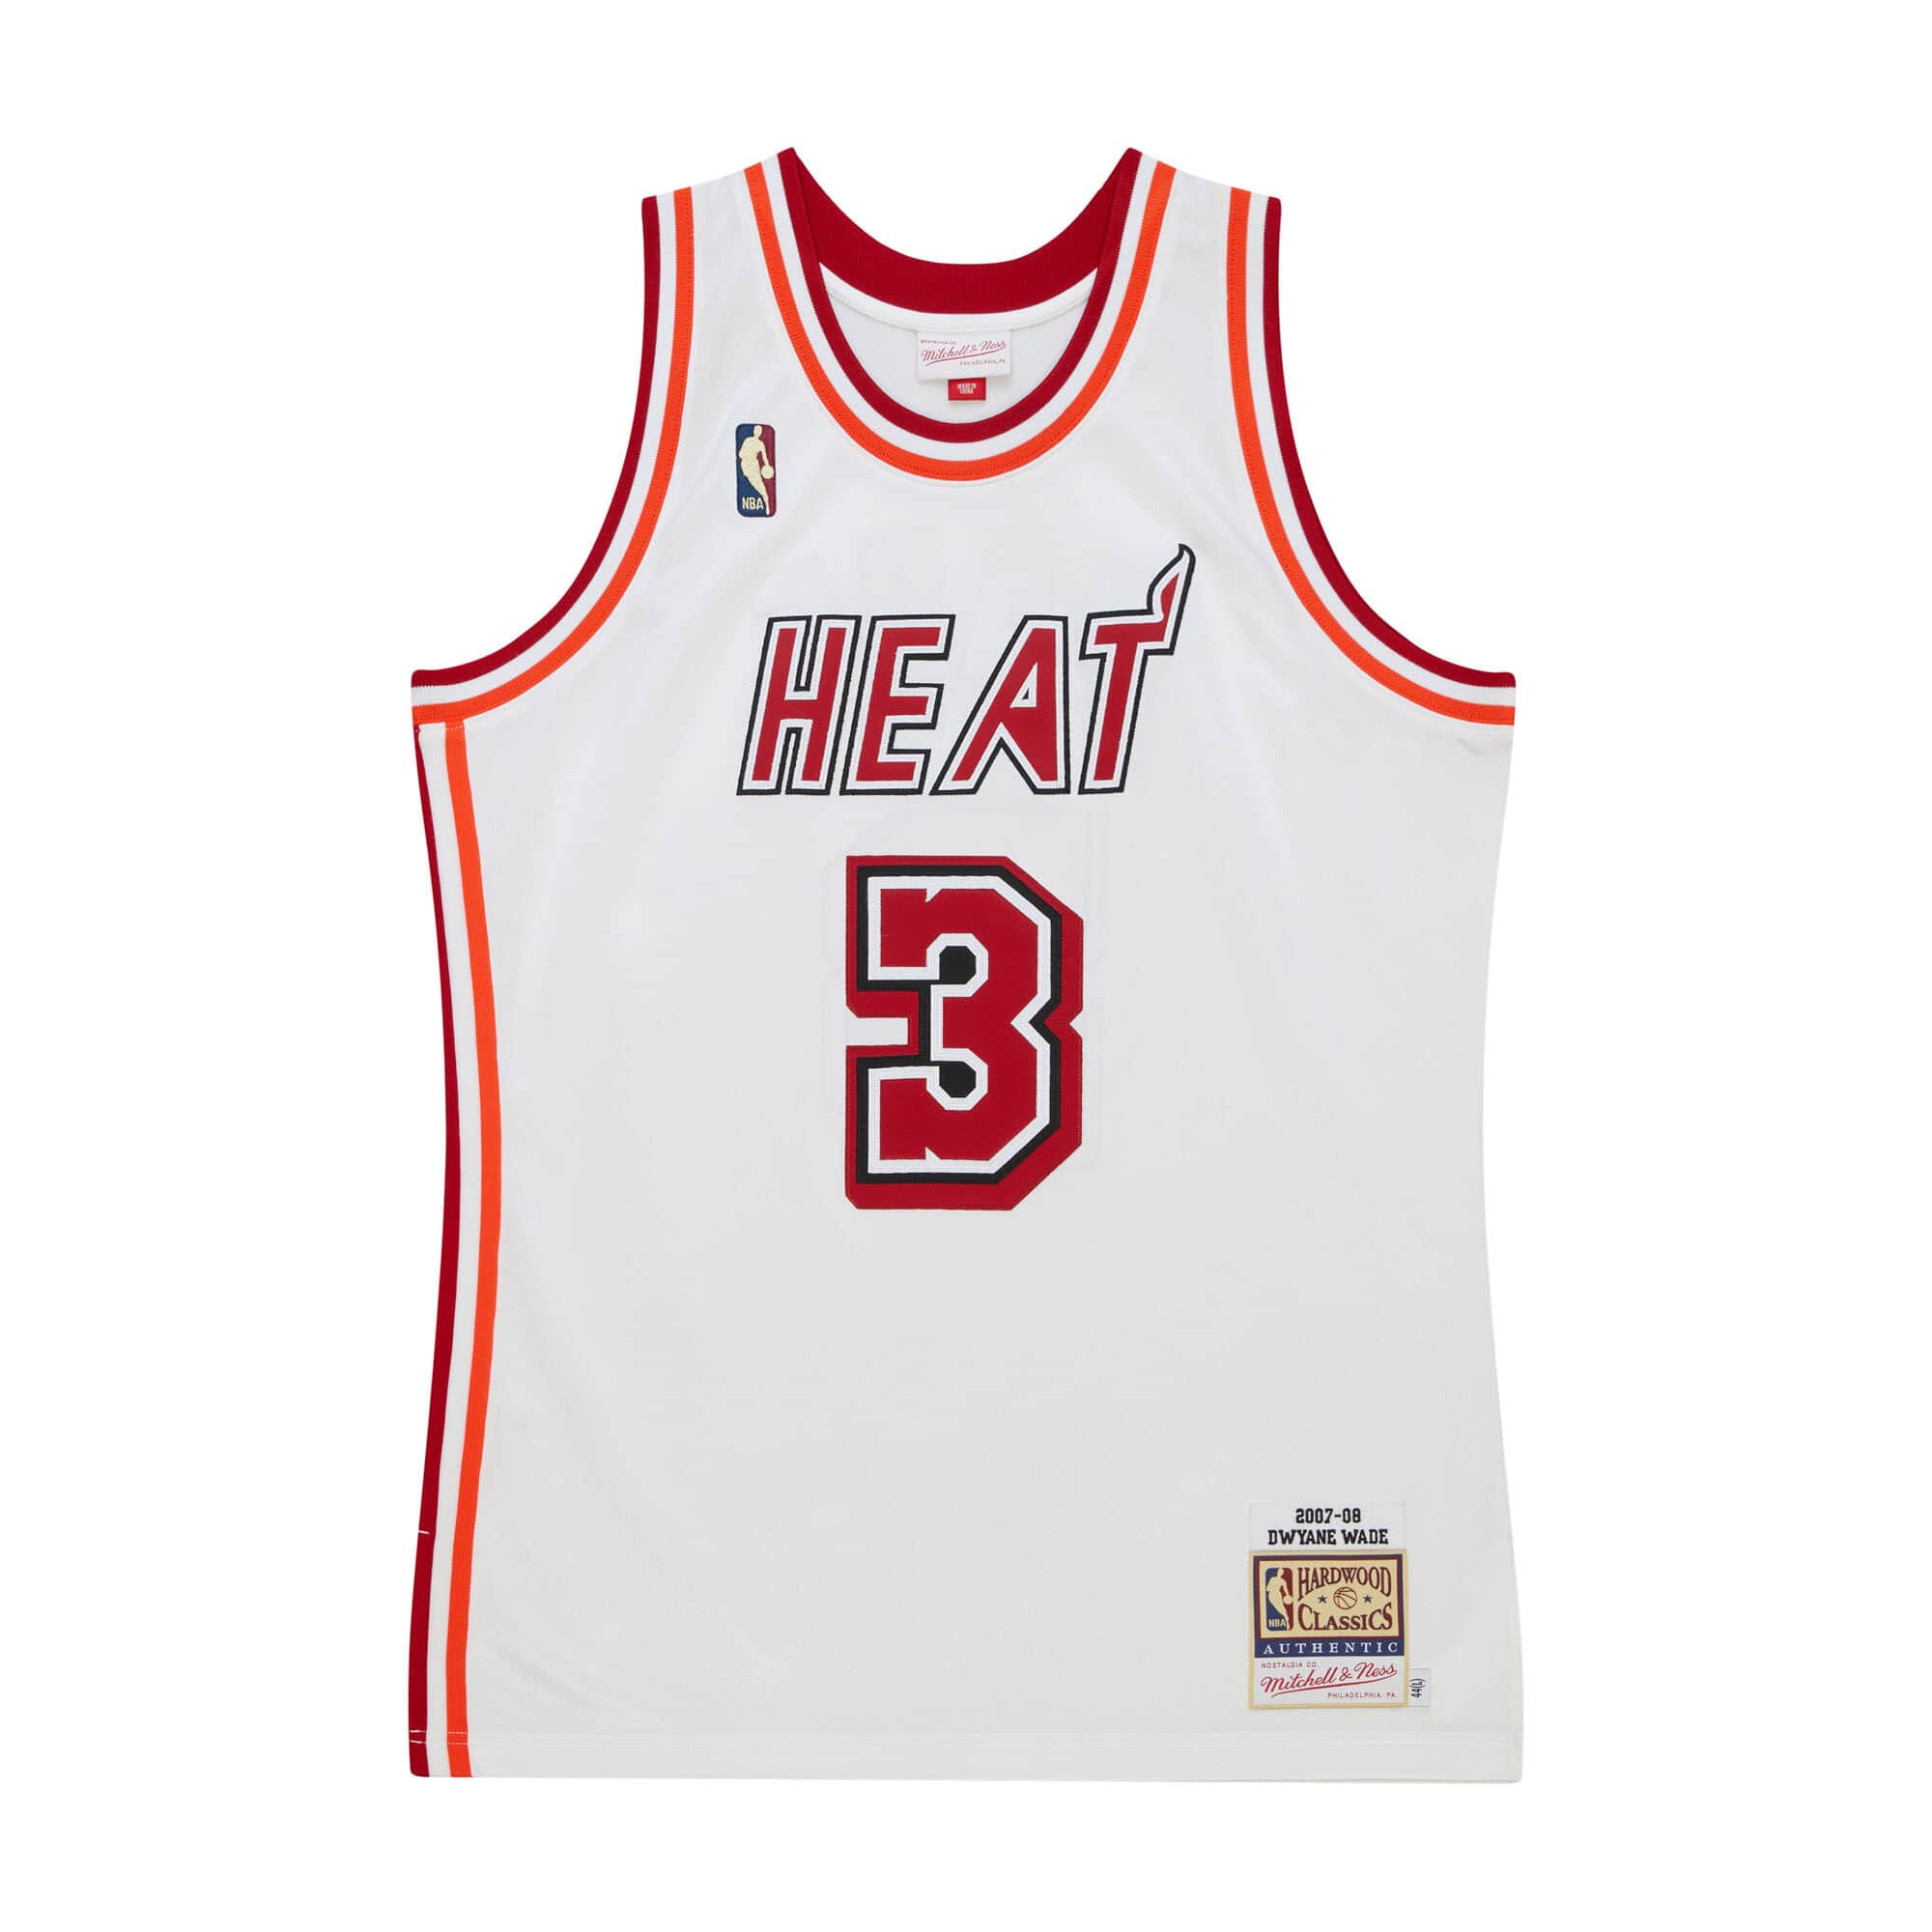 Authentic Vintage Nike NBA Miami Heat Tim Hardaway Basketball Jersey